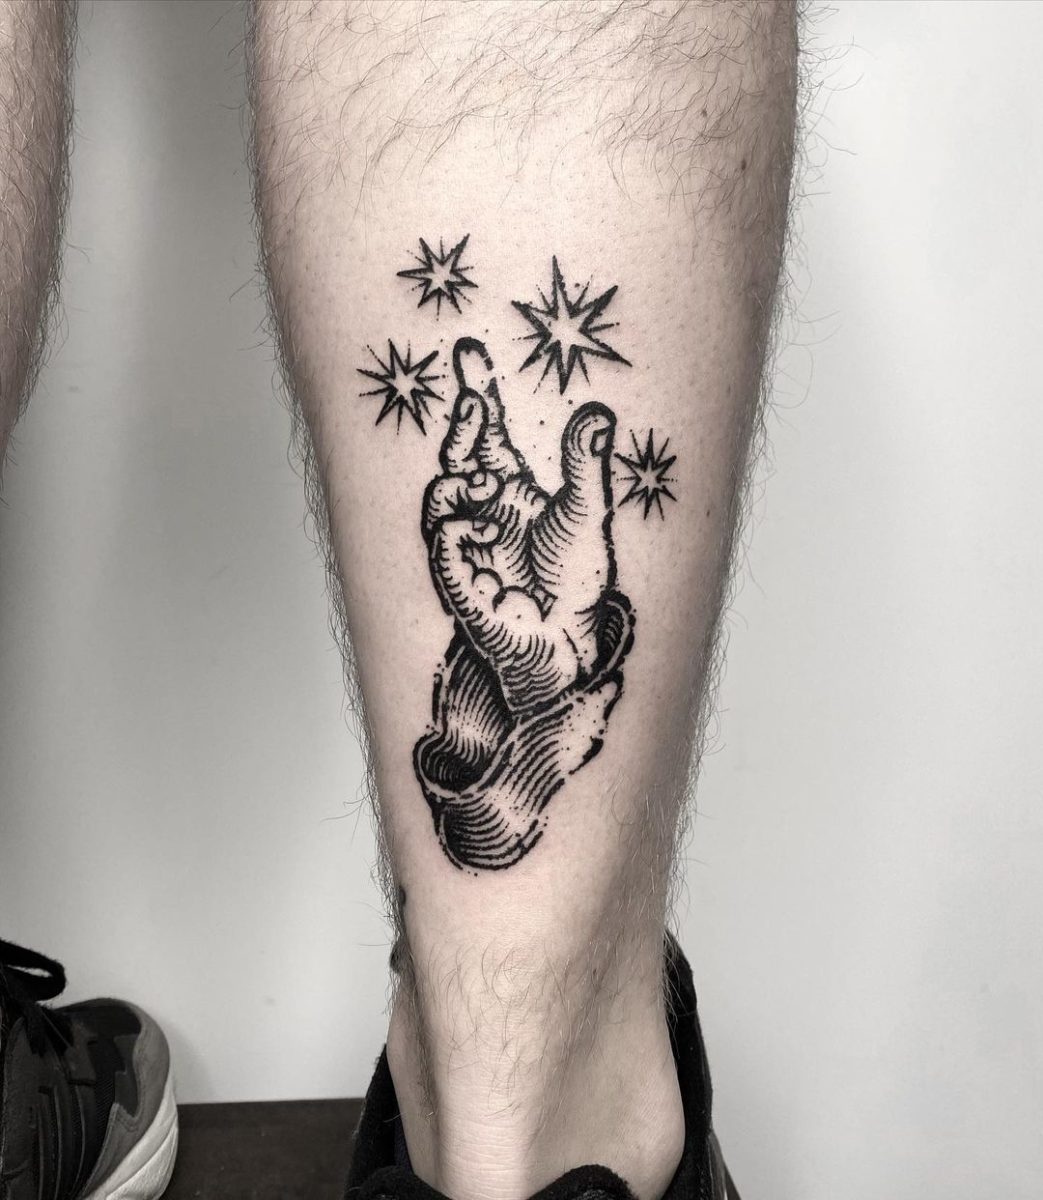 Star Tattoos and Ideas